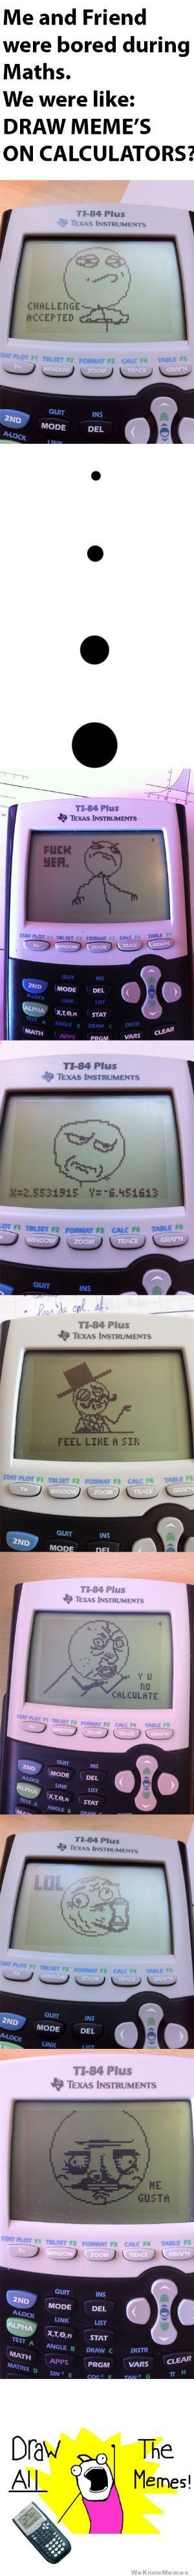 like a calculator boss - meme